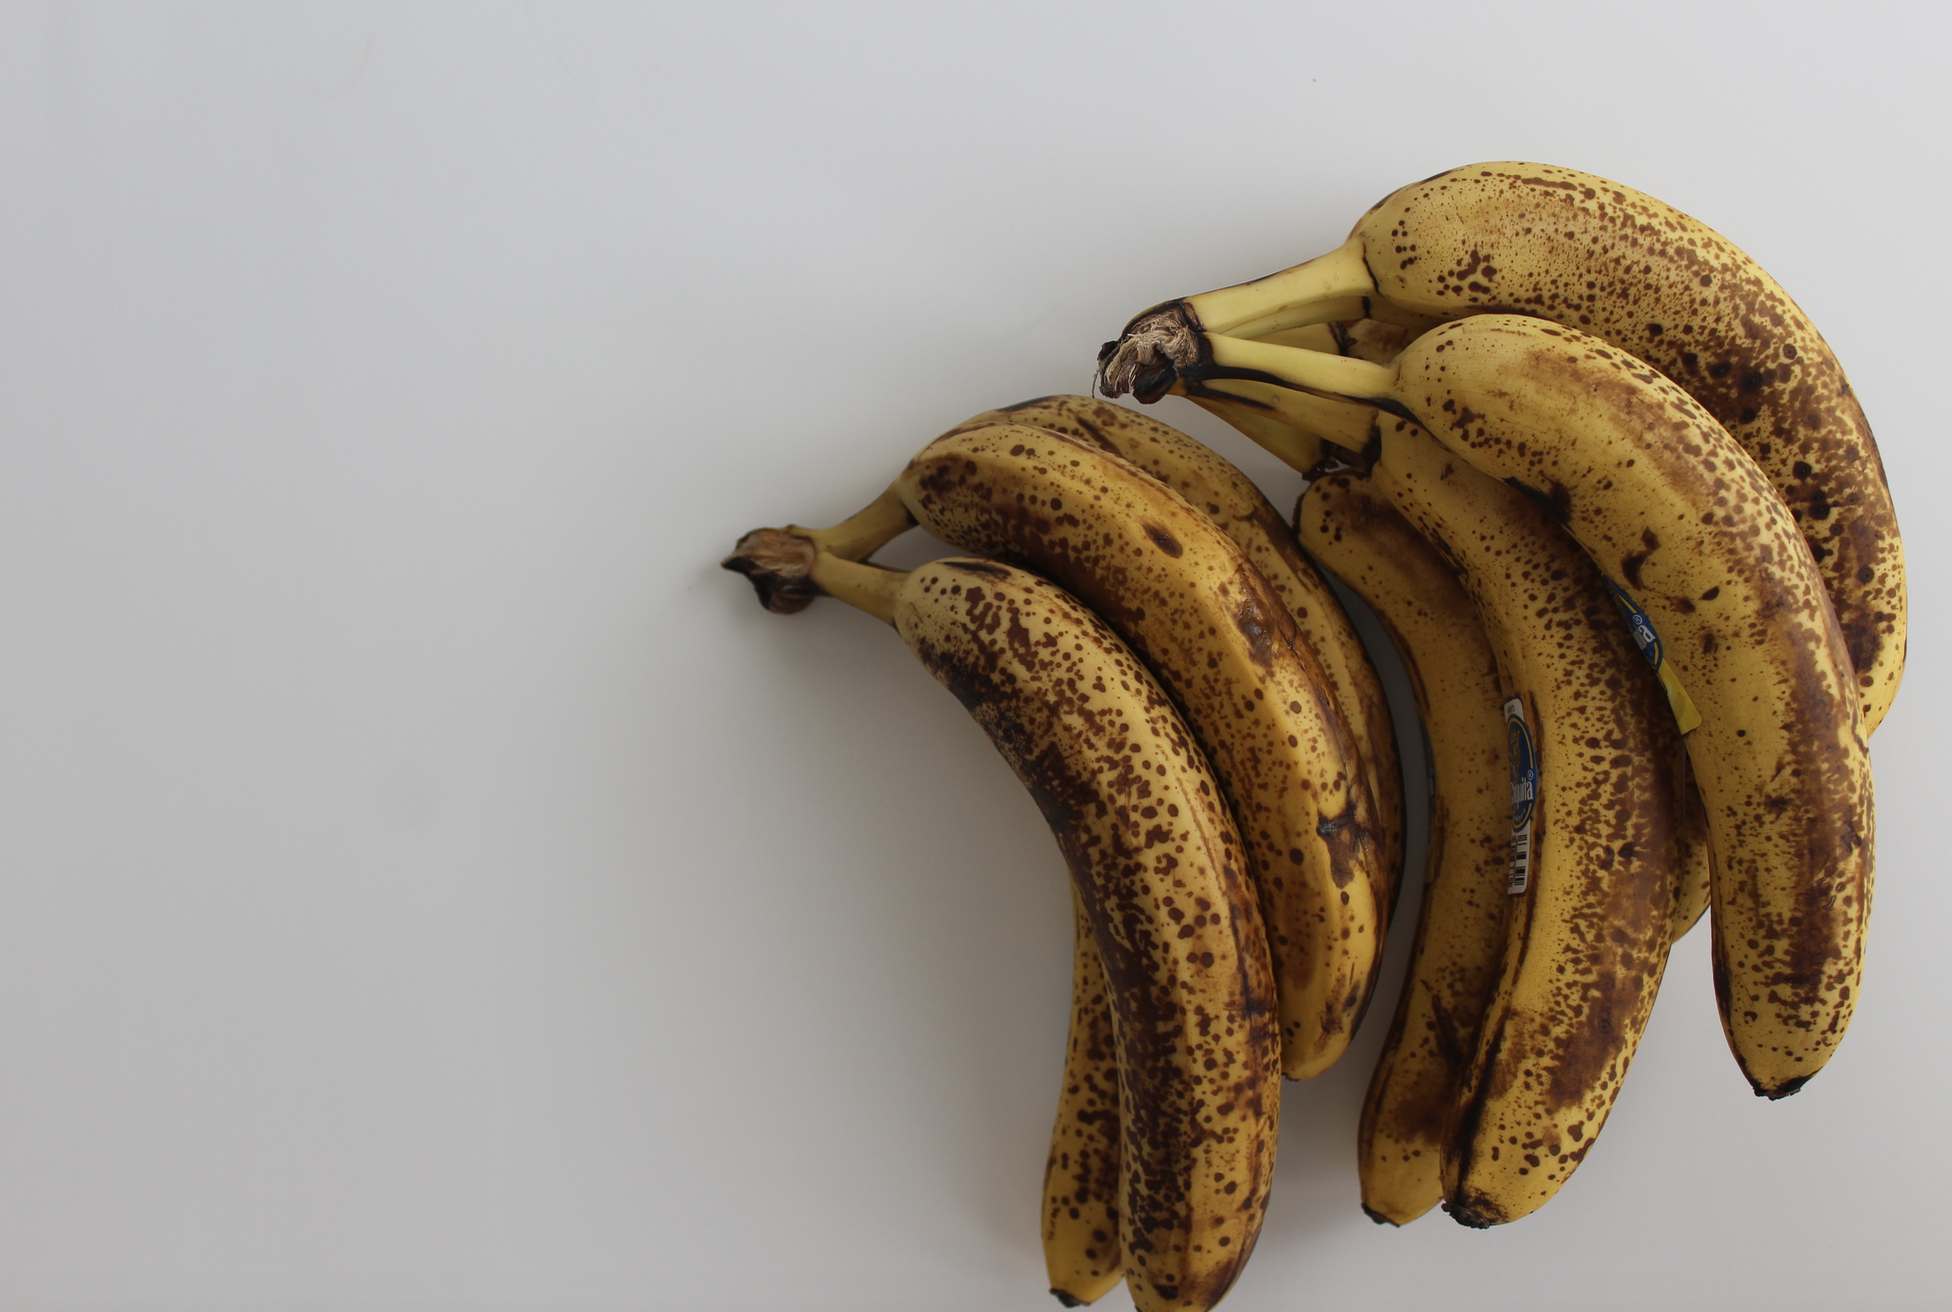 ripe bananas on white counter